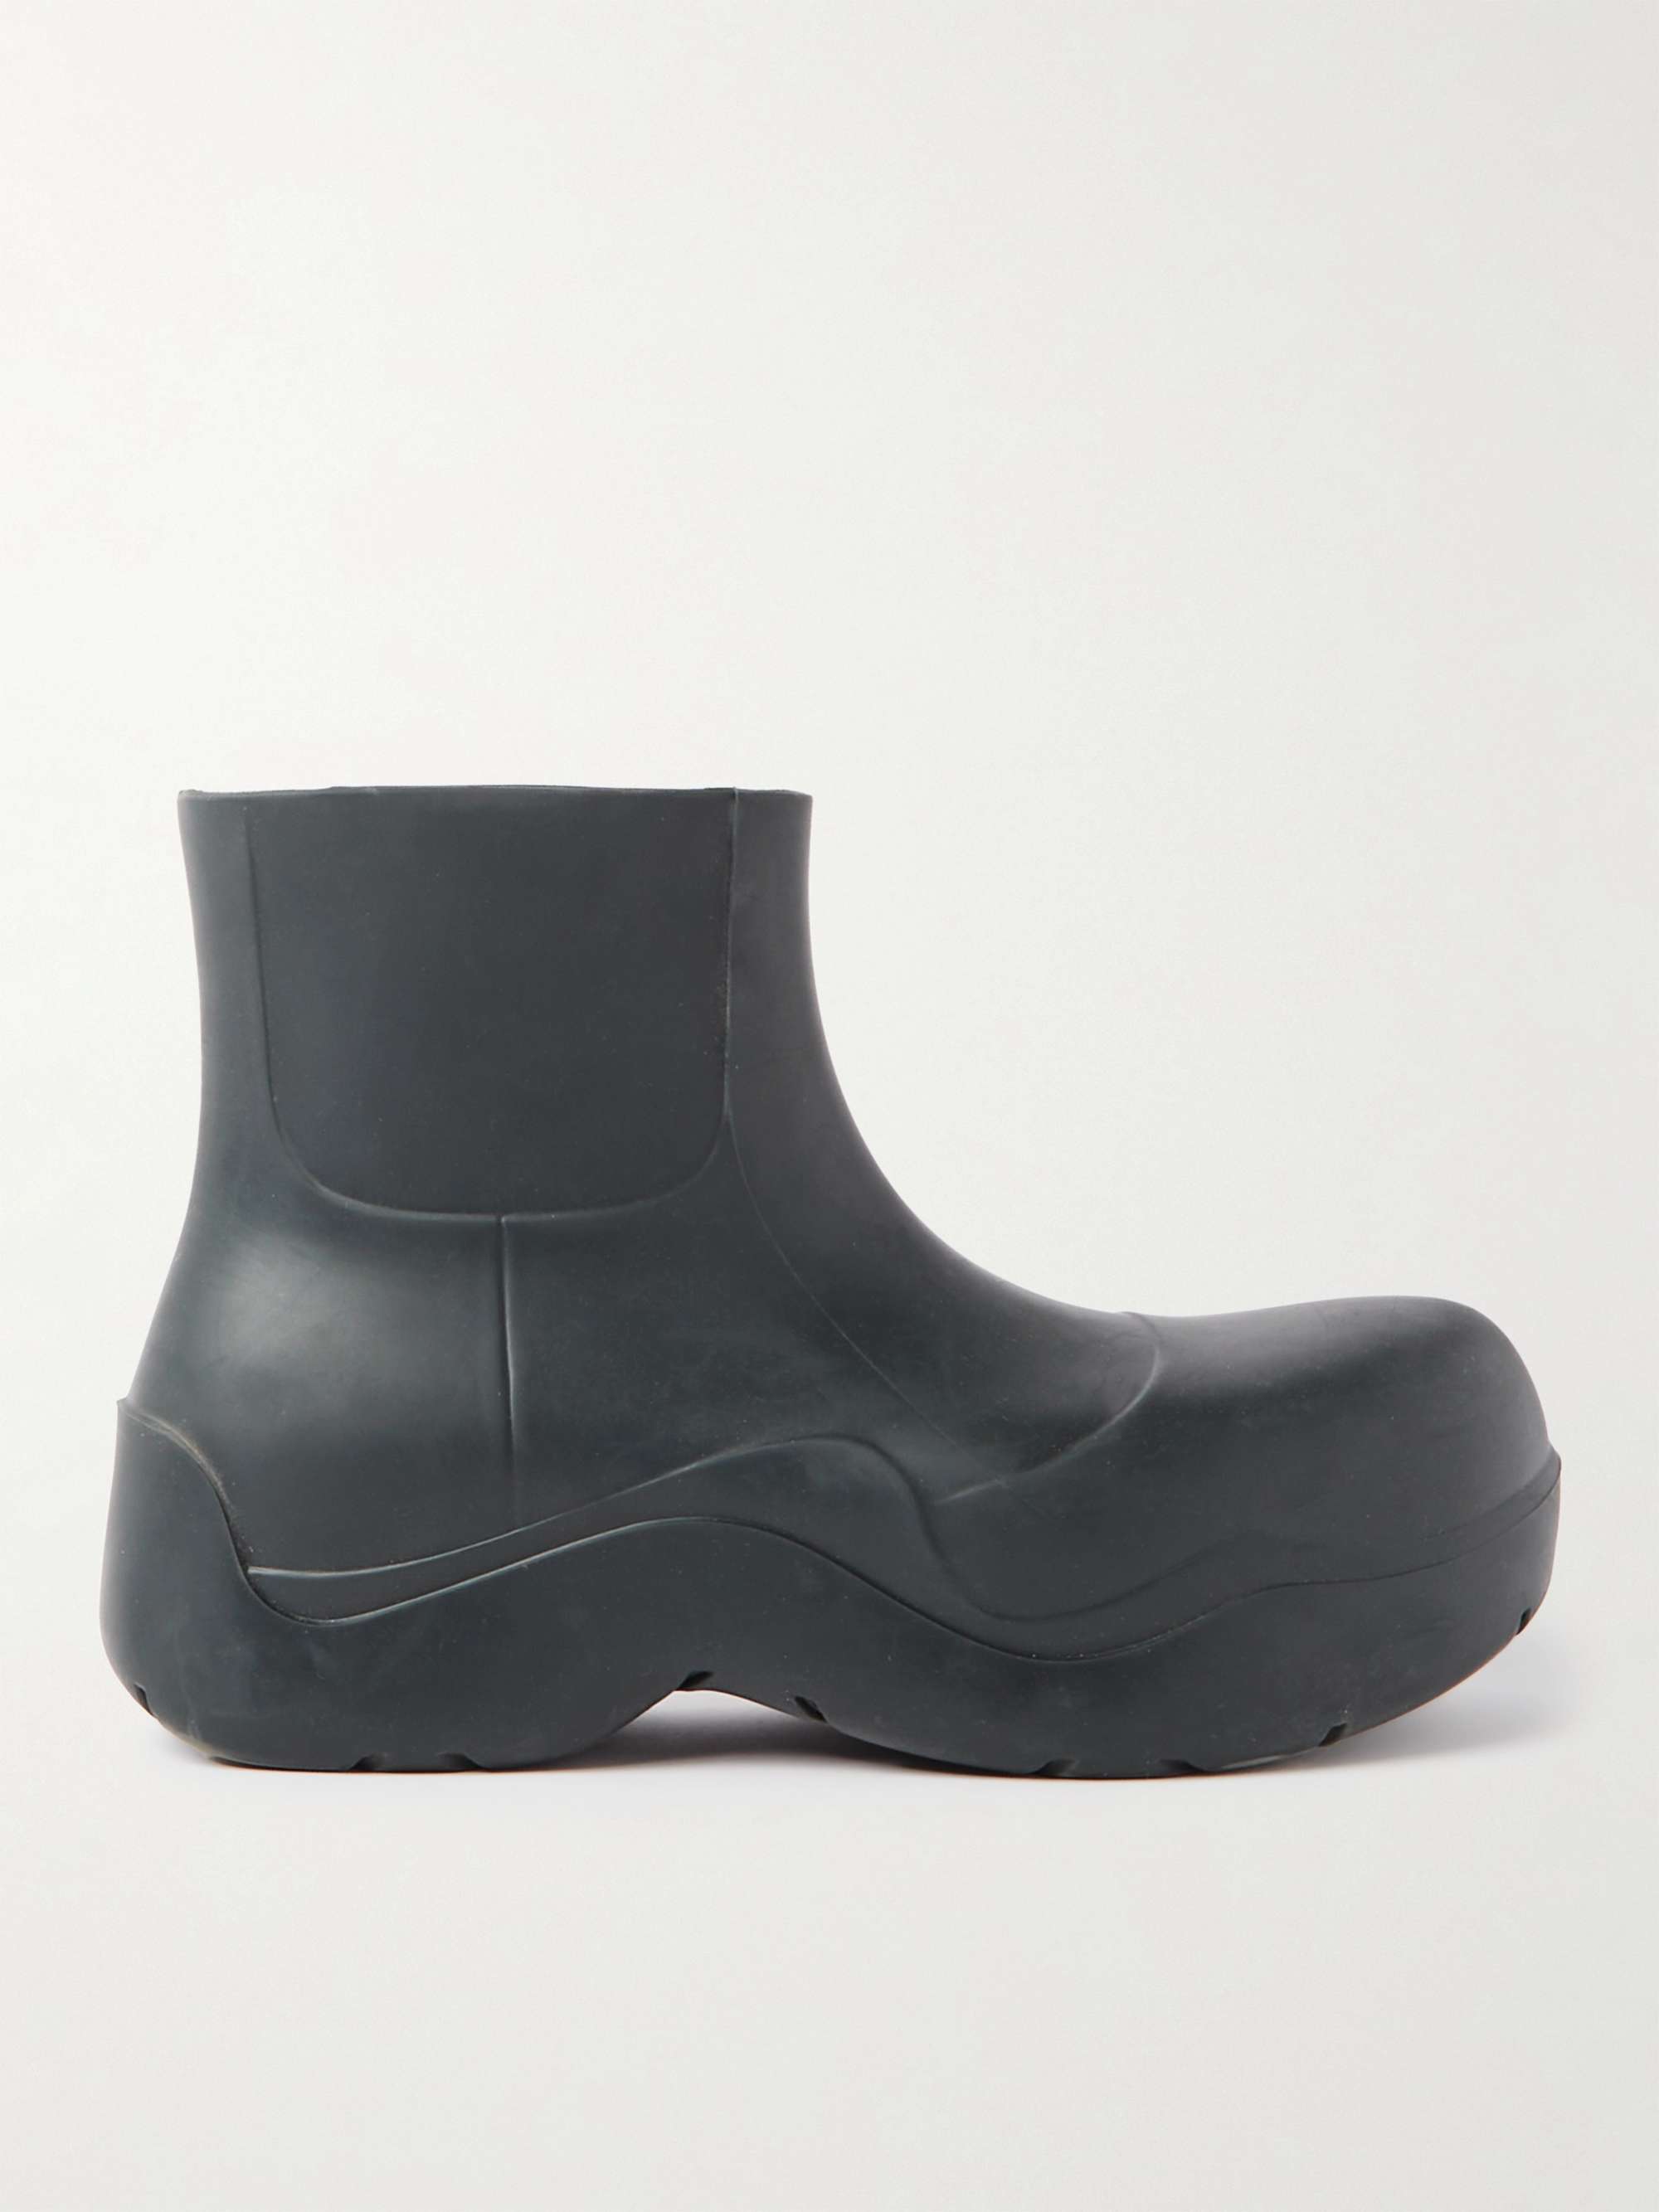 Bottega Veneta Puddle Boots Black サイズ43